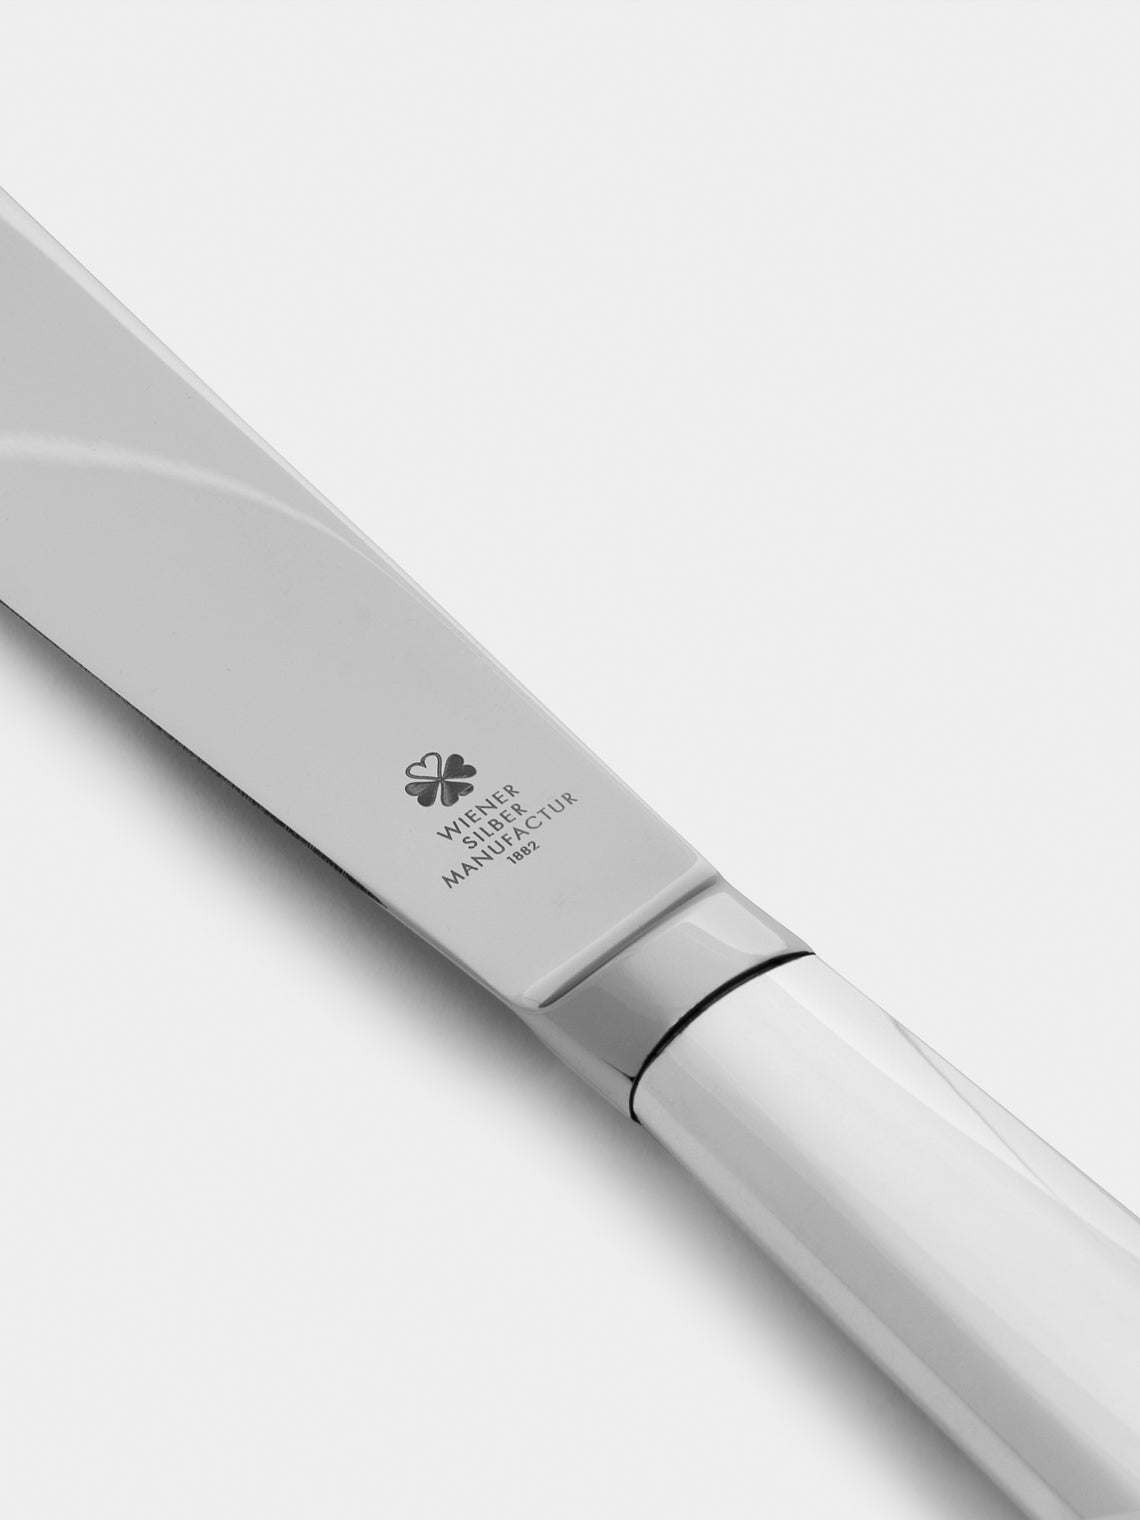 Wiener Silber Manufactur - Josef Hoffmann 135 Silver-Plated Dinner Knife - Silver - ABASK